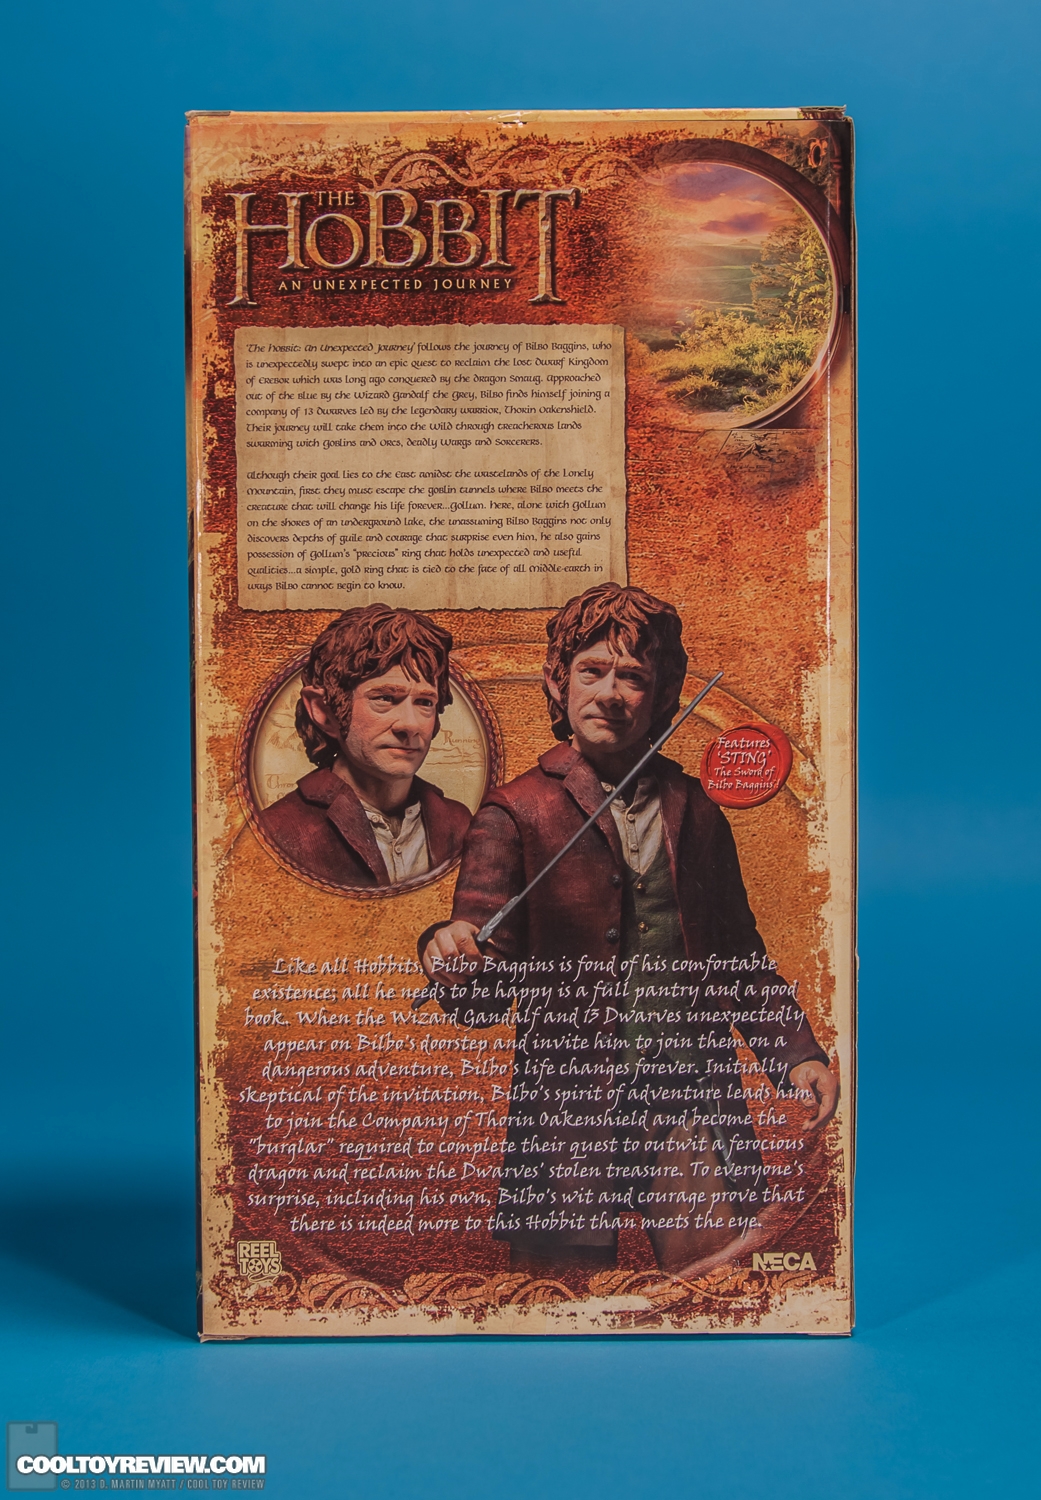 Bilbo_Baggins_The_Hobbit_NECA-019.jpg